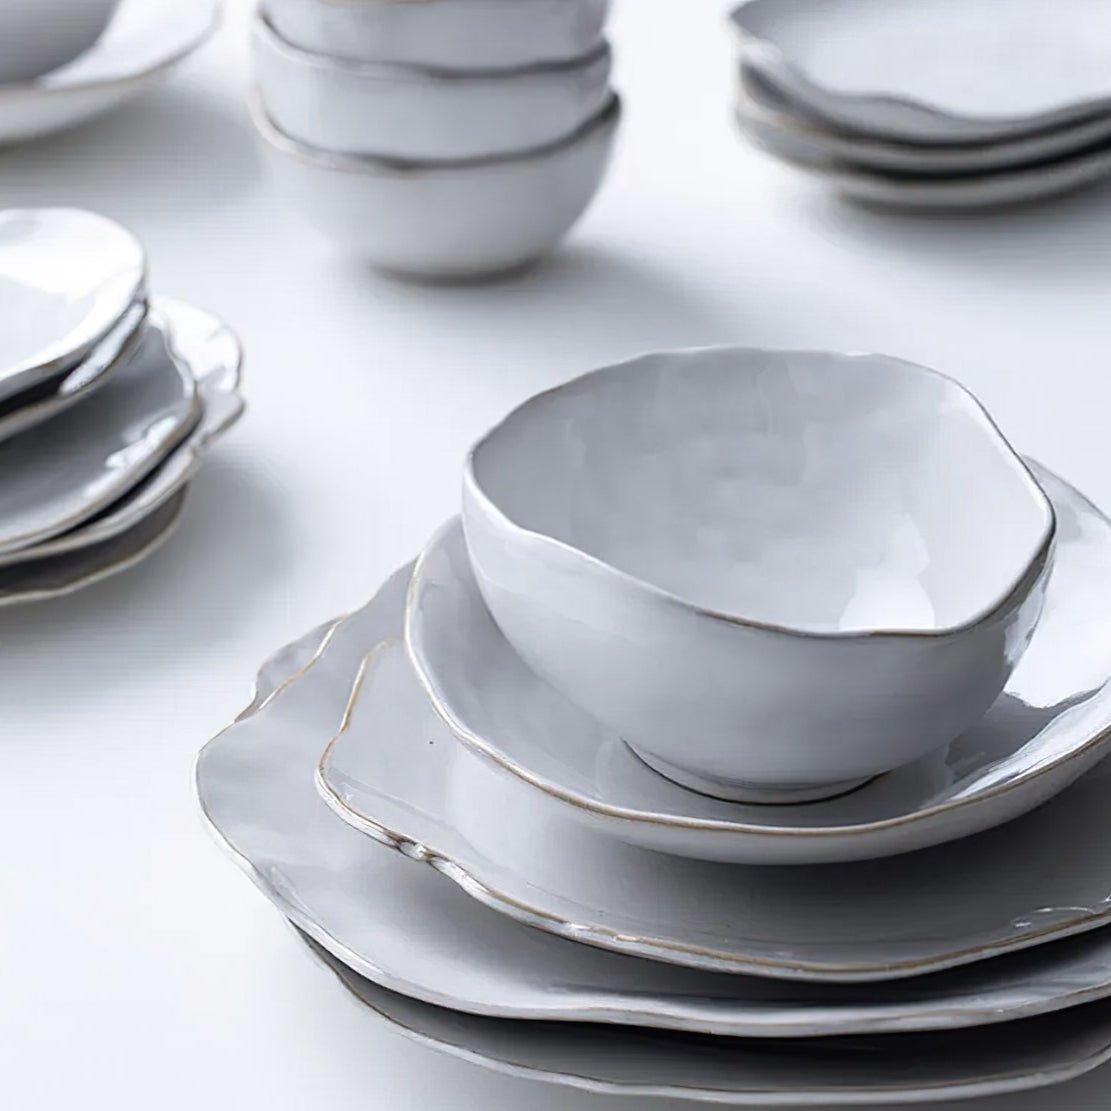 White, ceramic irregular tableware dish plates and bowls